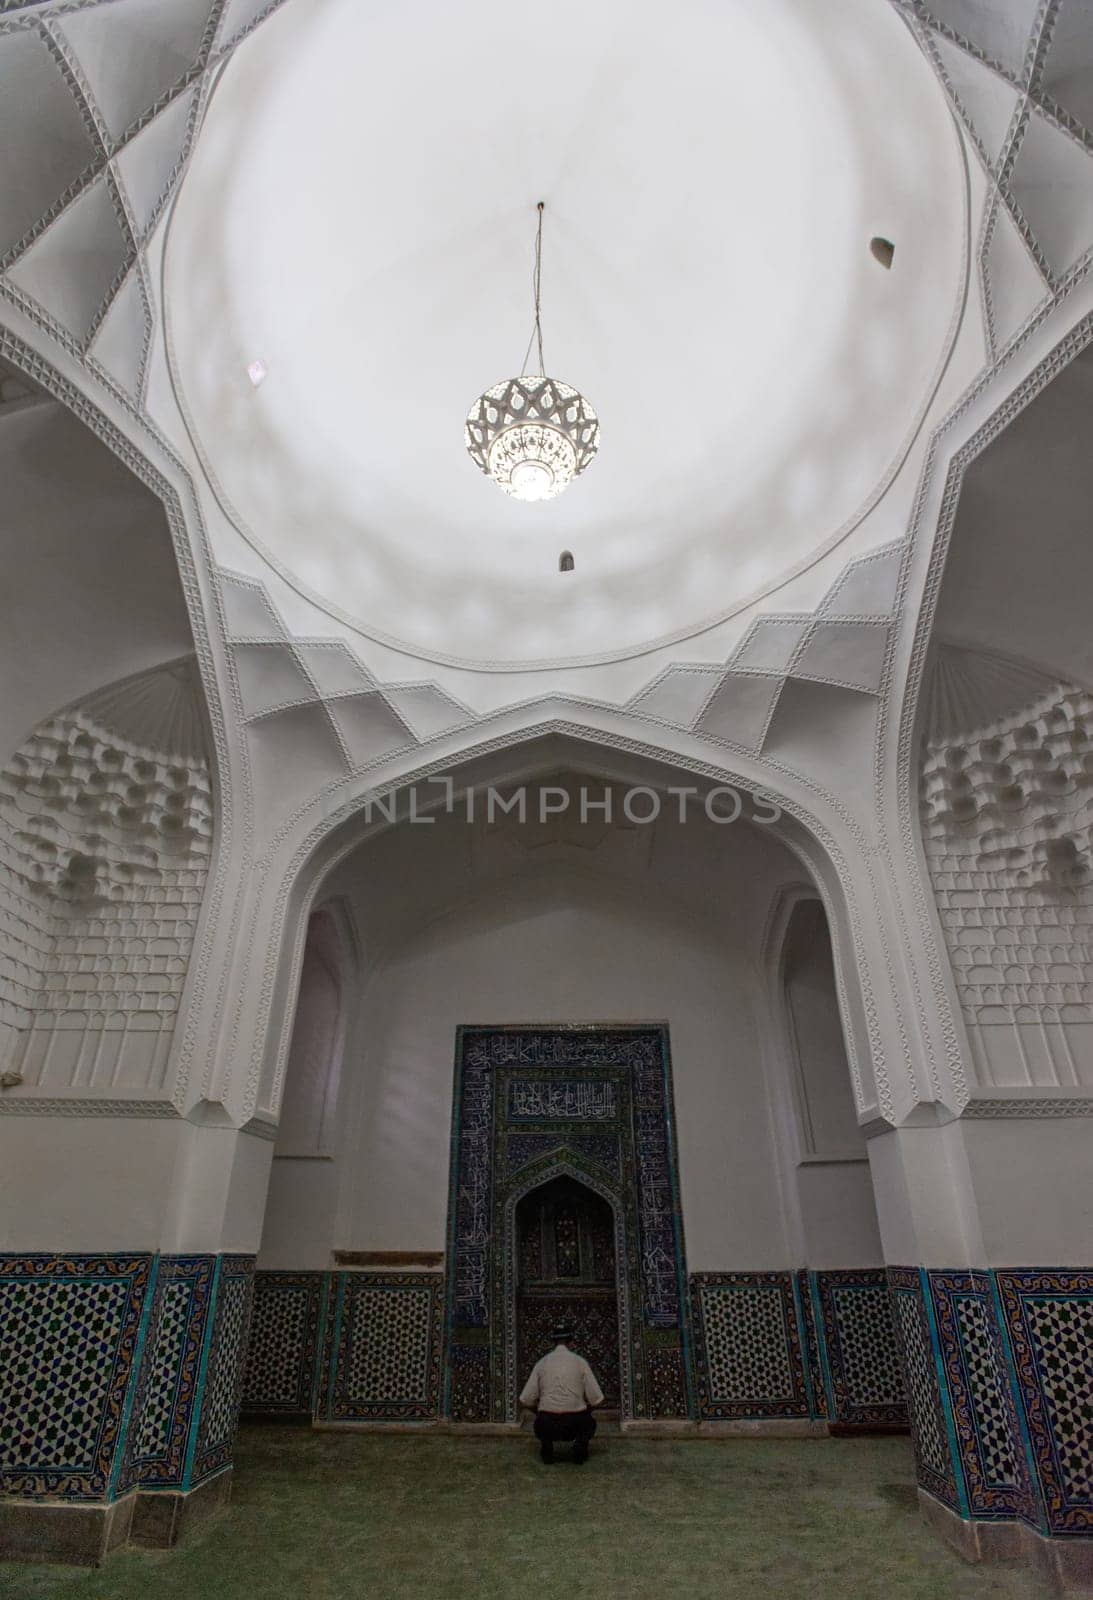 A man praying in the mosque in Samarkand, Uzbekistan by A_Karim